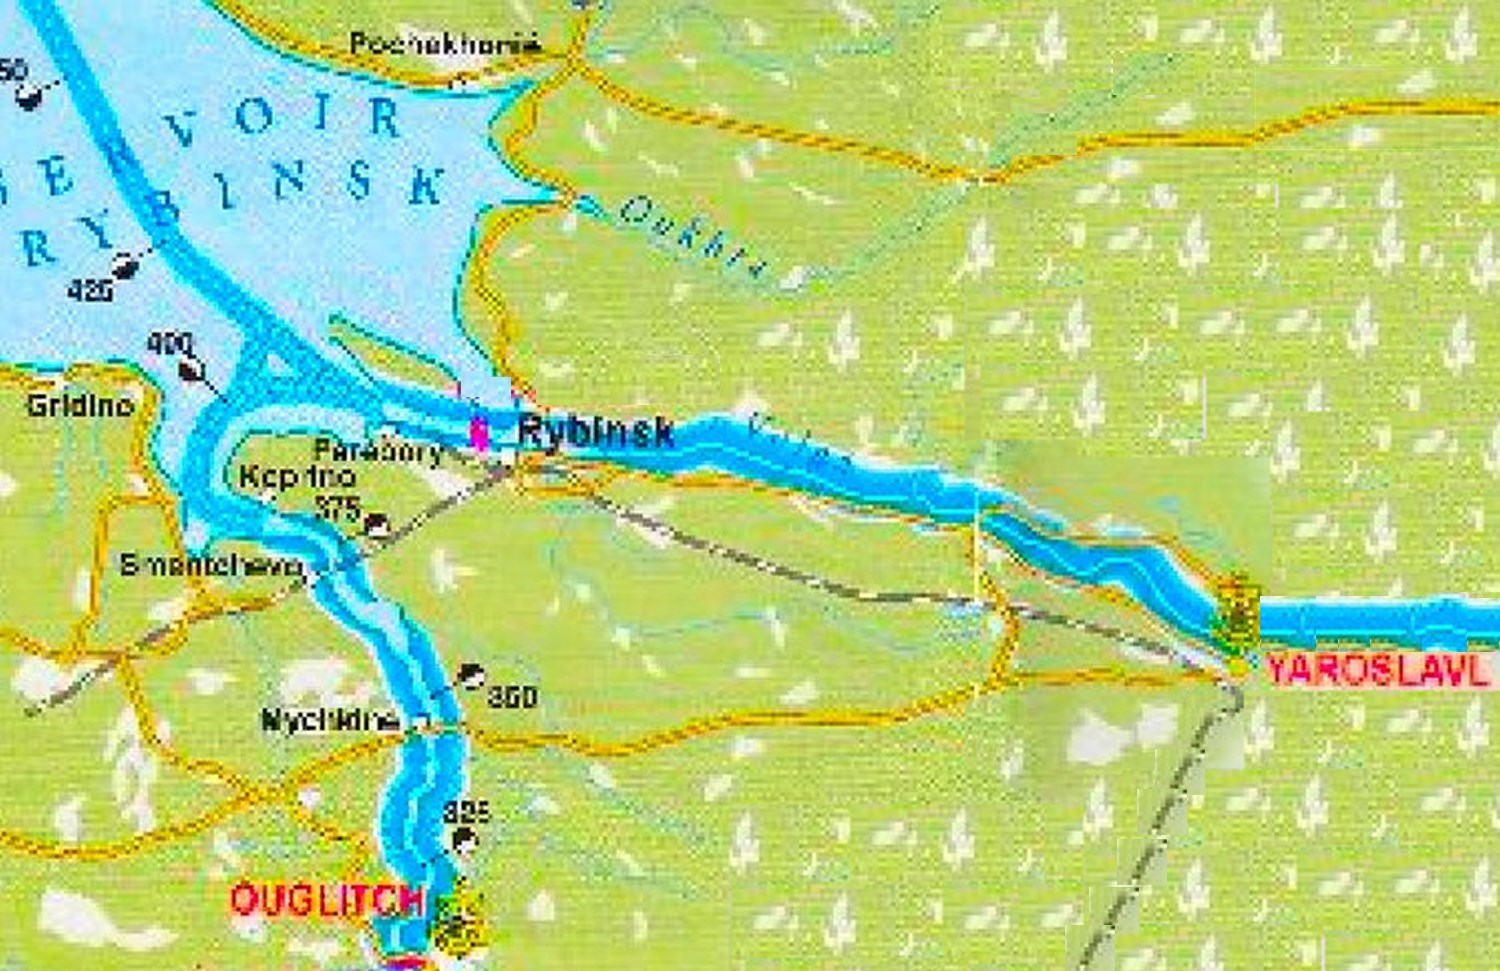 trajet 2 - Ouglitck - Yaroslavl-1